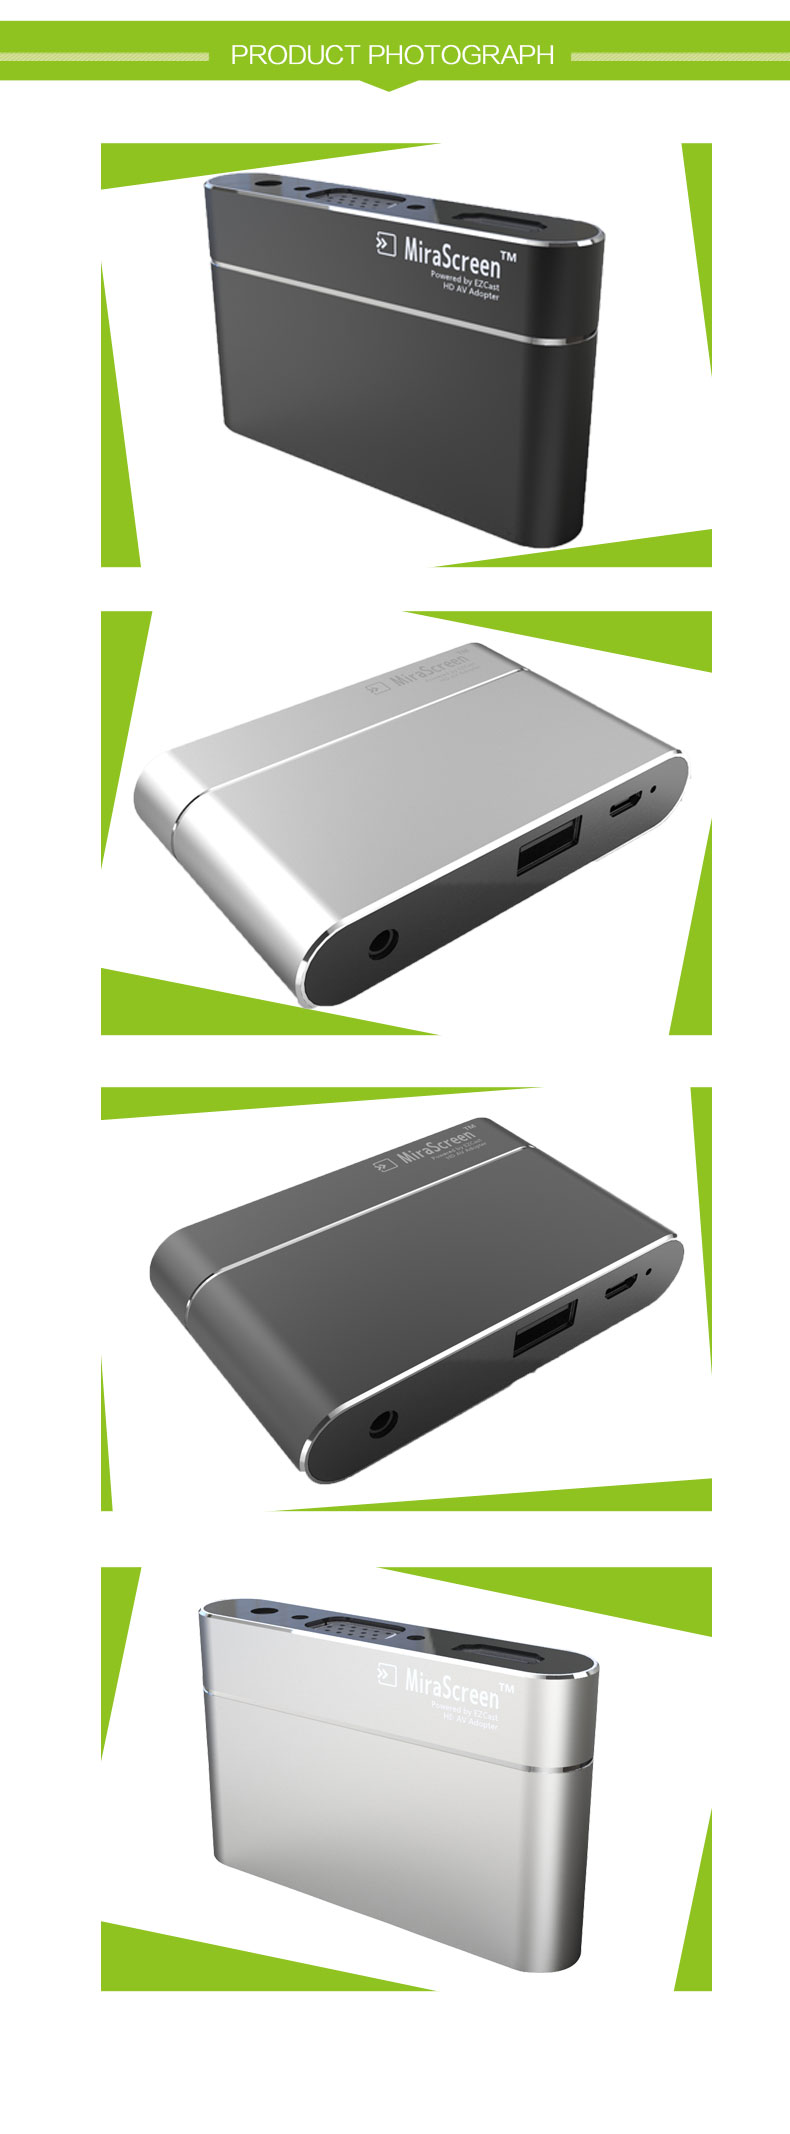 Mirascreen-X6-HD-VGA-USB-Adapter-TV-Stick-Display-Dongle-Video-Audio-Streaming-1187360